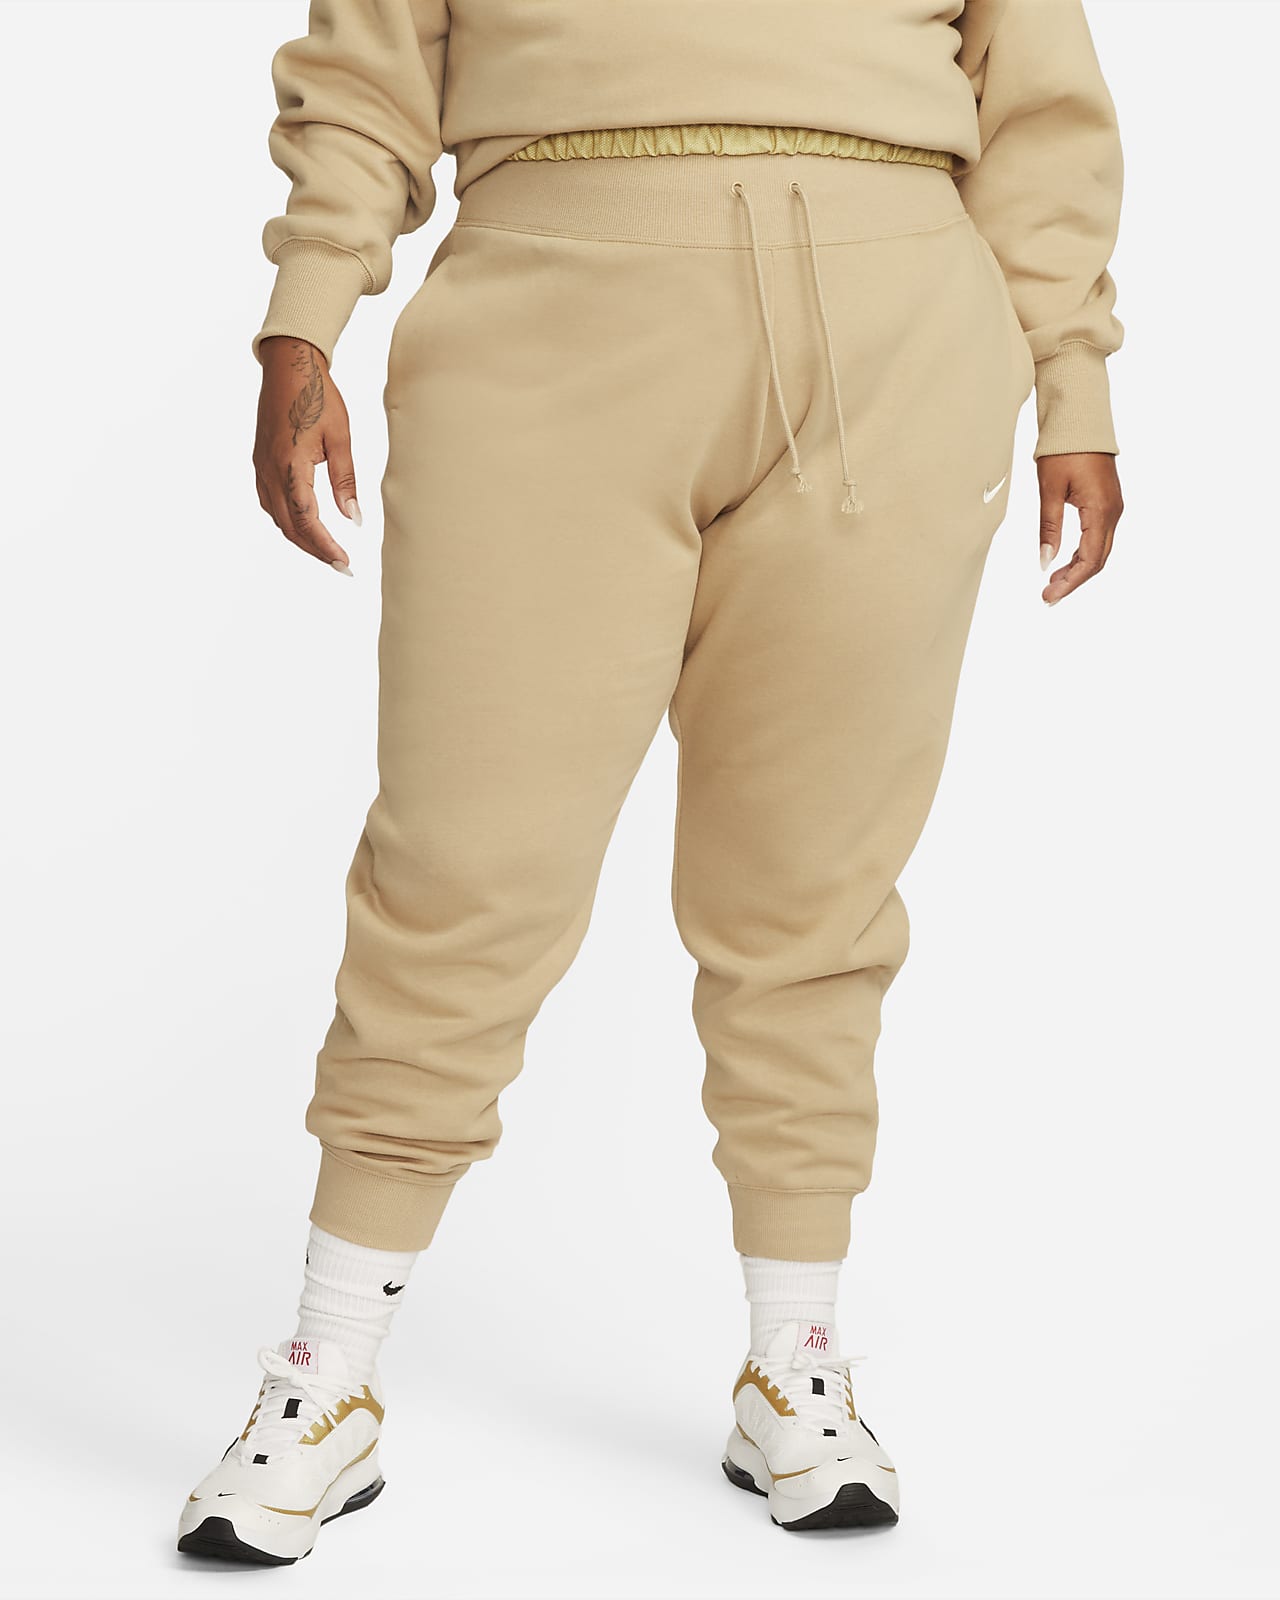 Pantalon de jogging taille haute Nike Sportswear Phoenix Fleece pour Femme (grande taille)